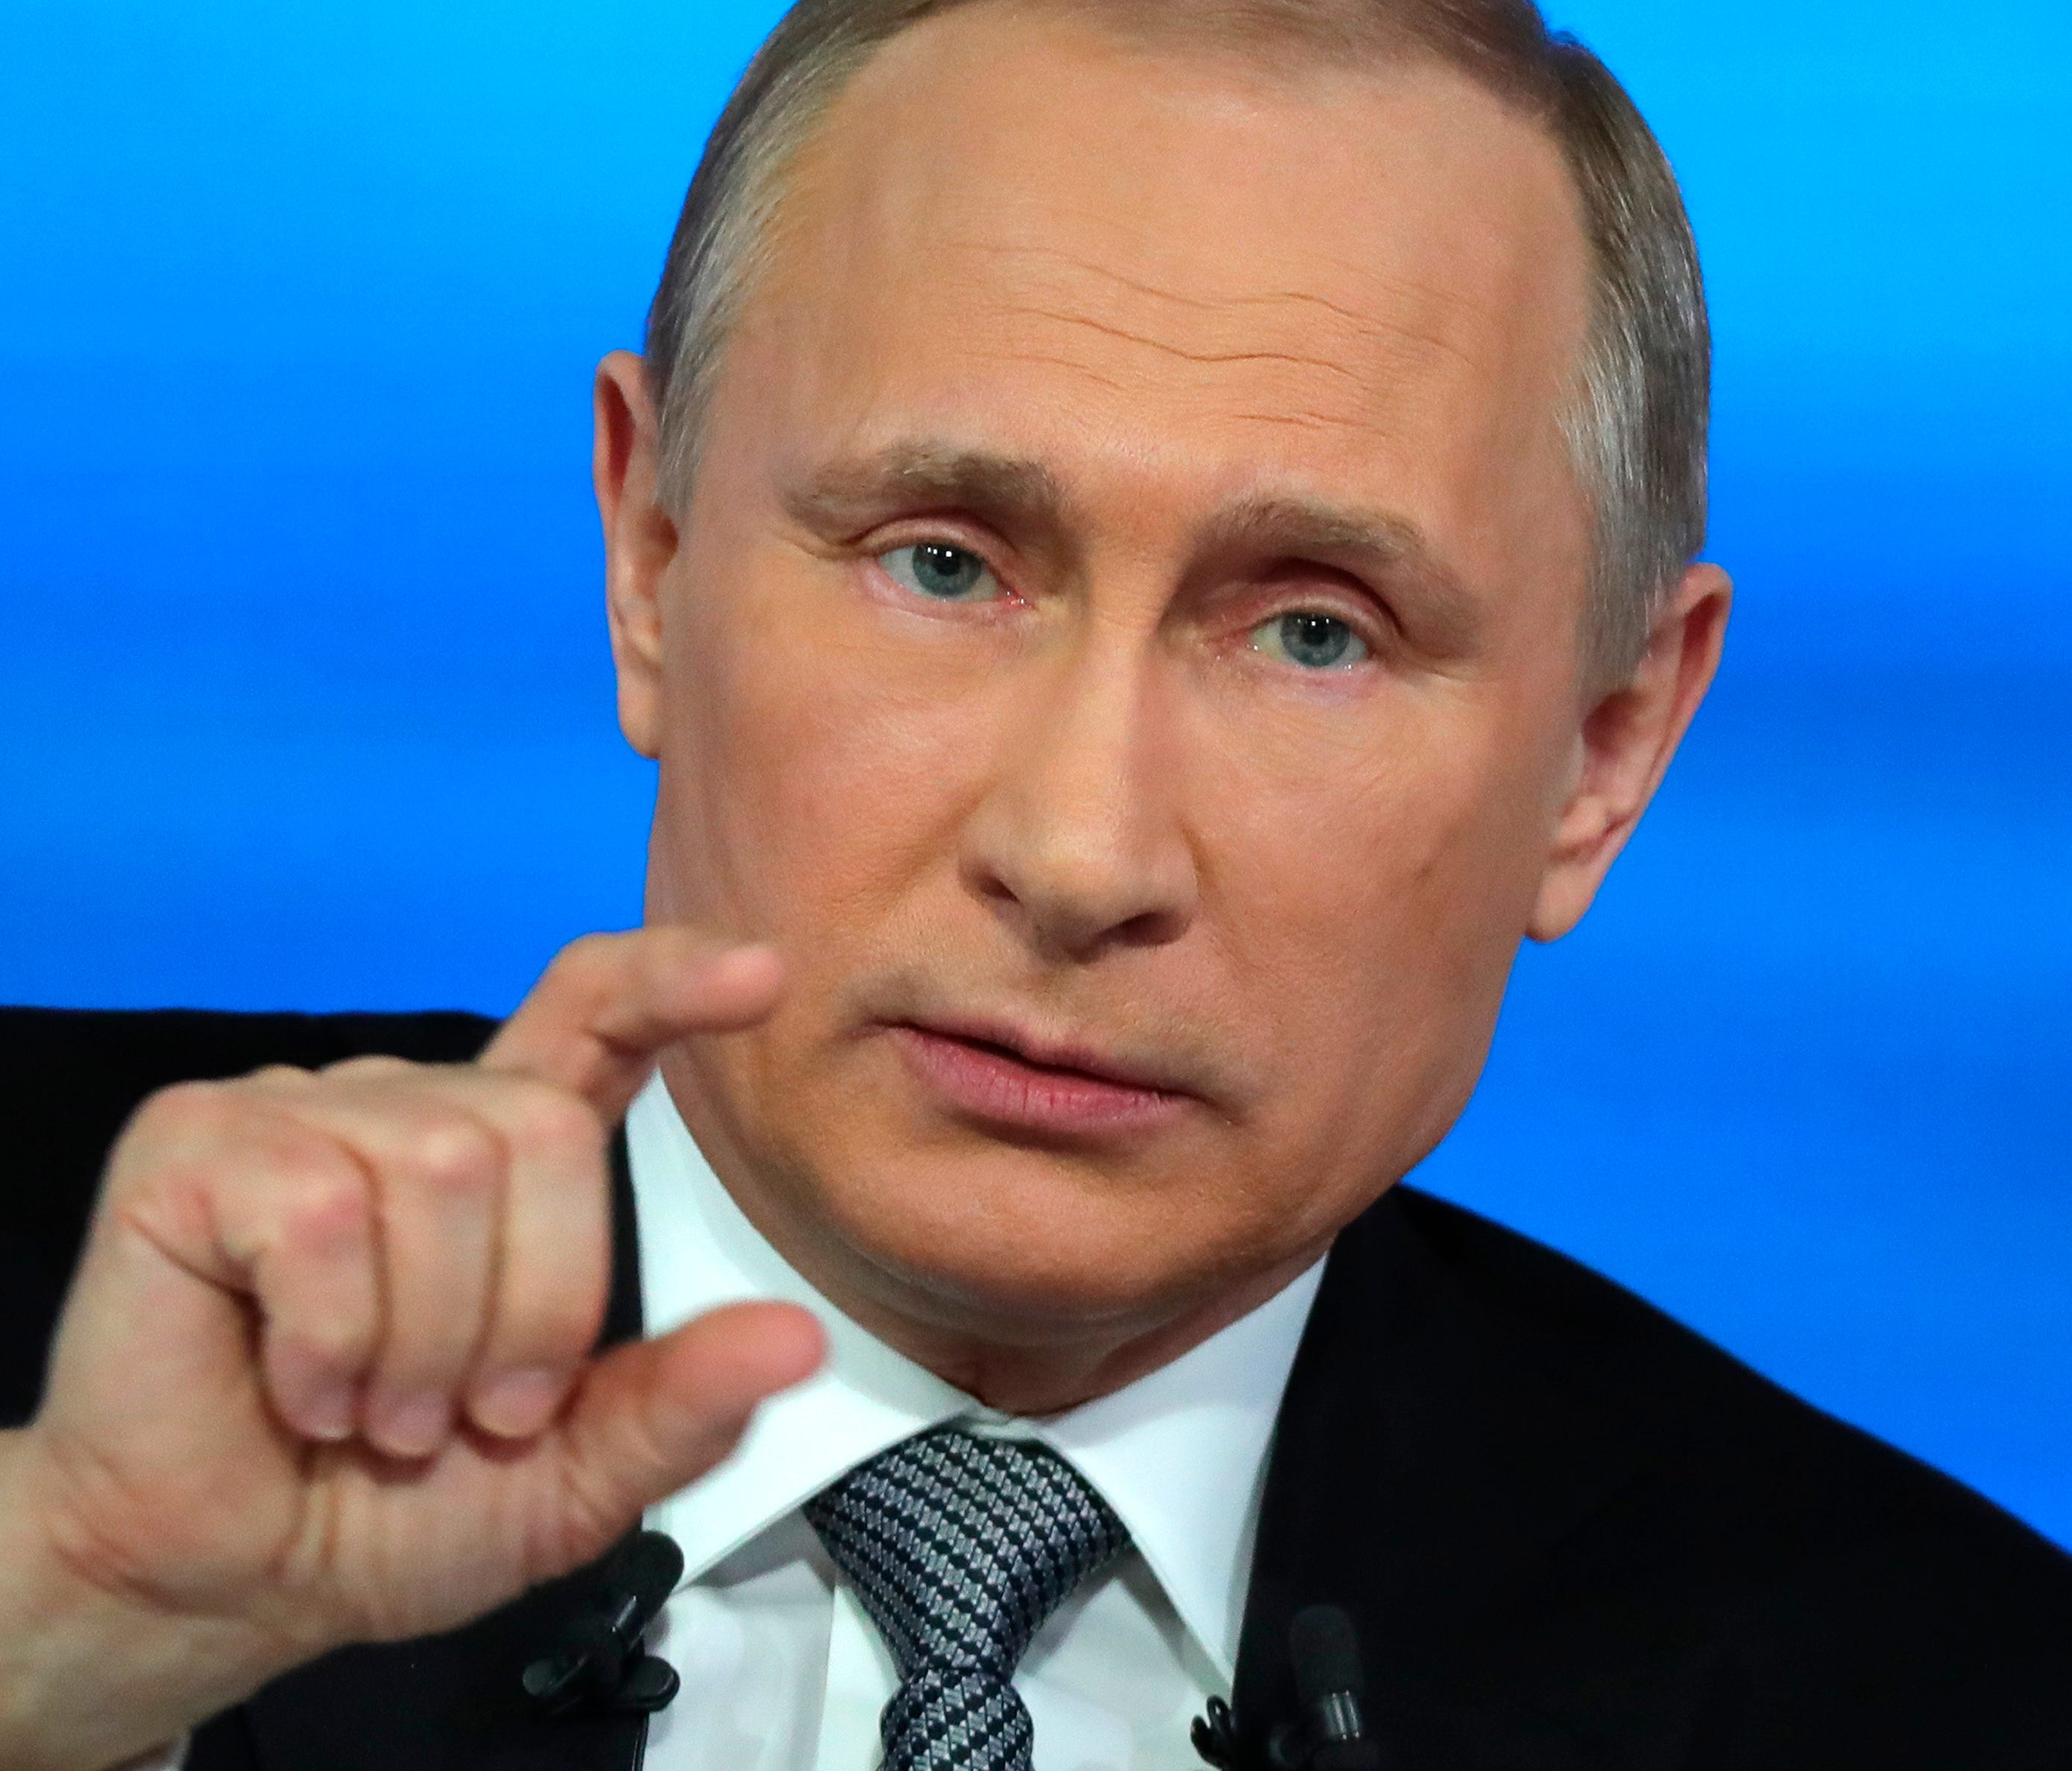 Lighter moments from Putin's marathon callin show